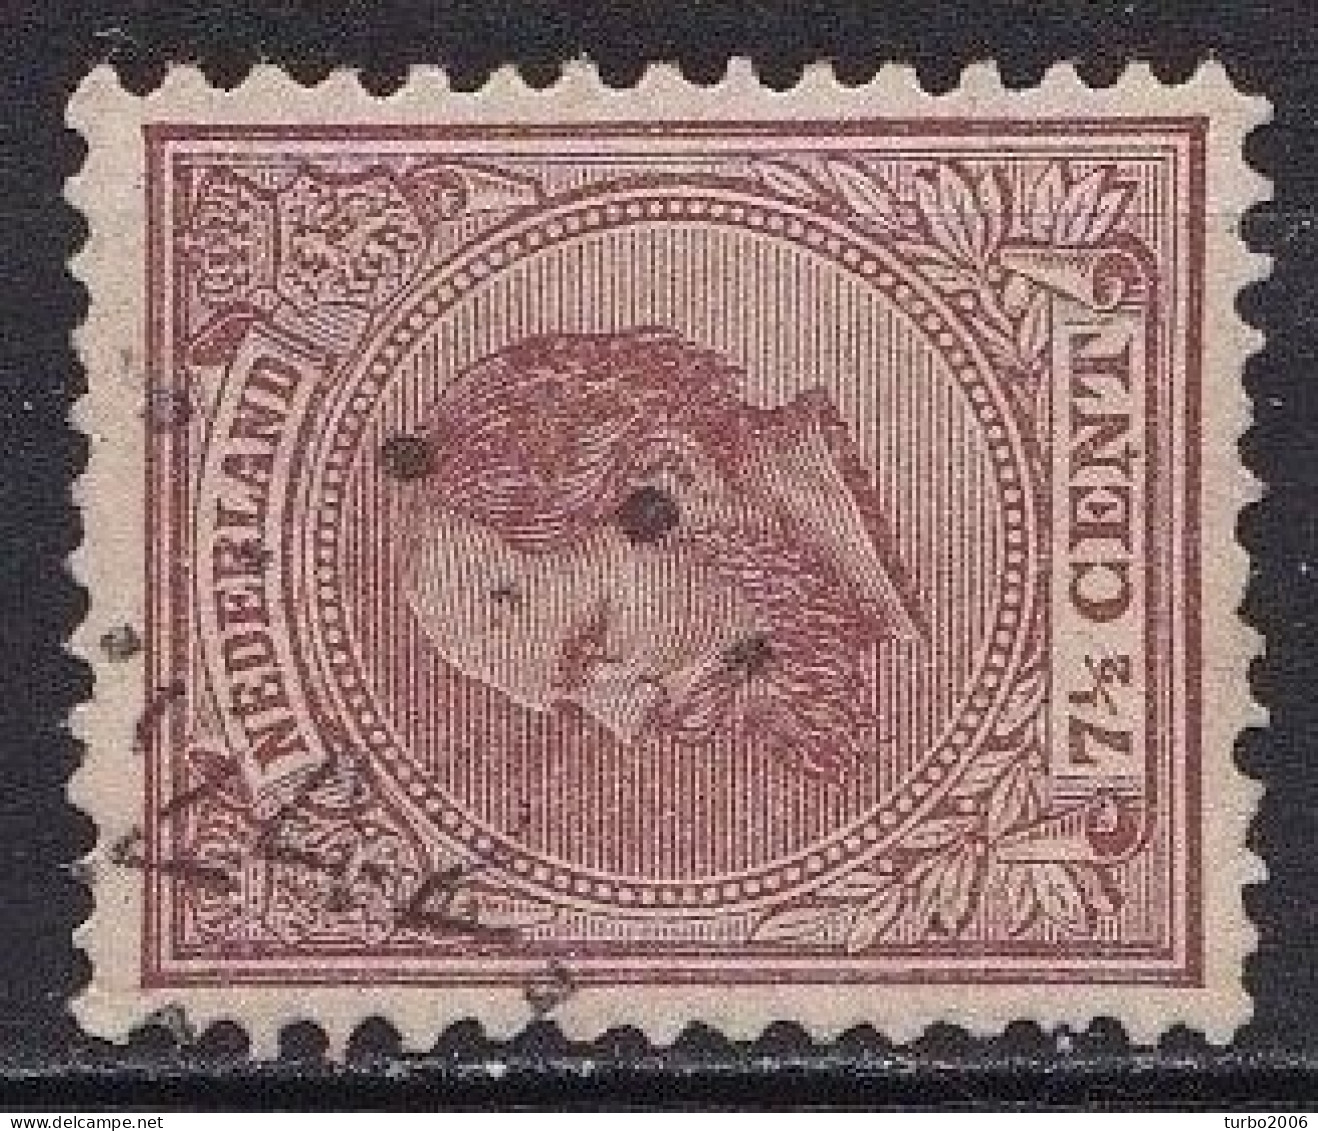 1872 Puntstempel 242 (Bussum) Op Koning Willem III  7½ Cent Bruin NVPH 20 - Storia Postale